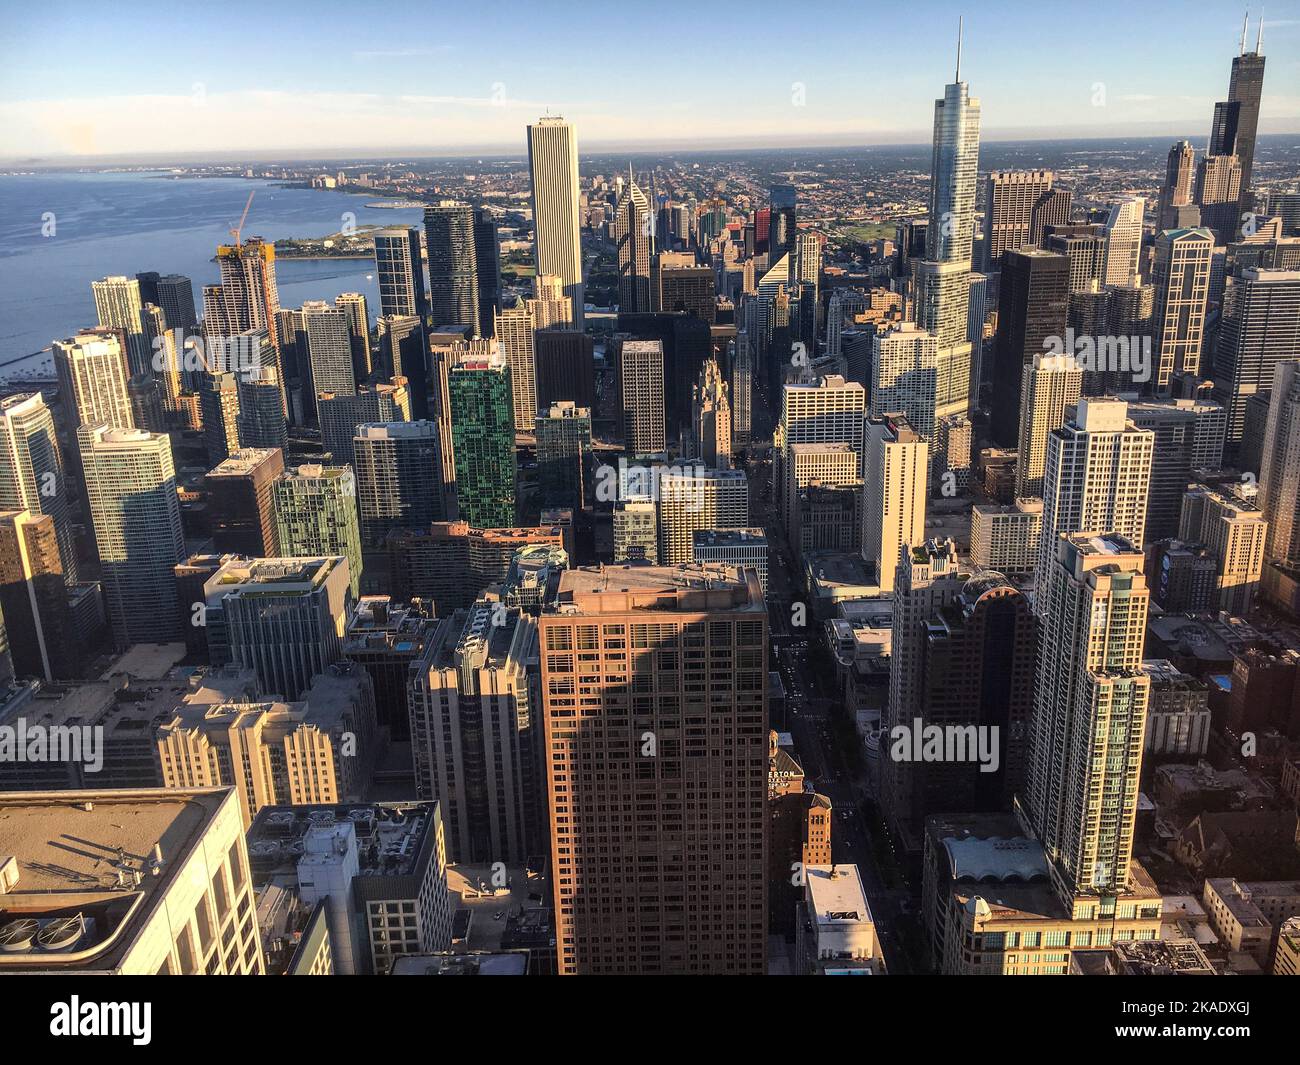 CHICAGO/ILLINOIS *** Local Caption *** Vue de la HANCOCK TOWER Stock Photo